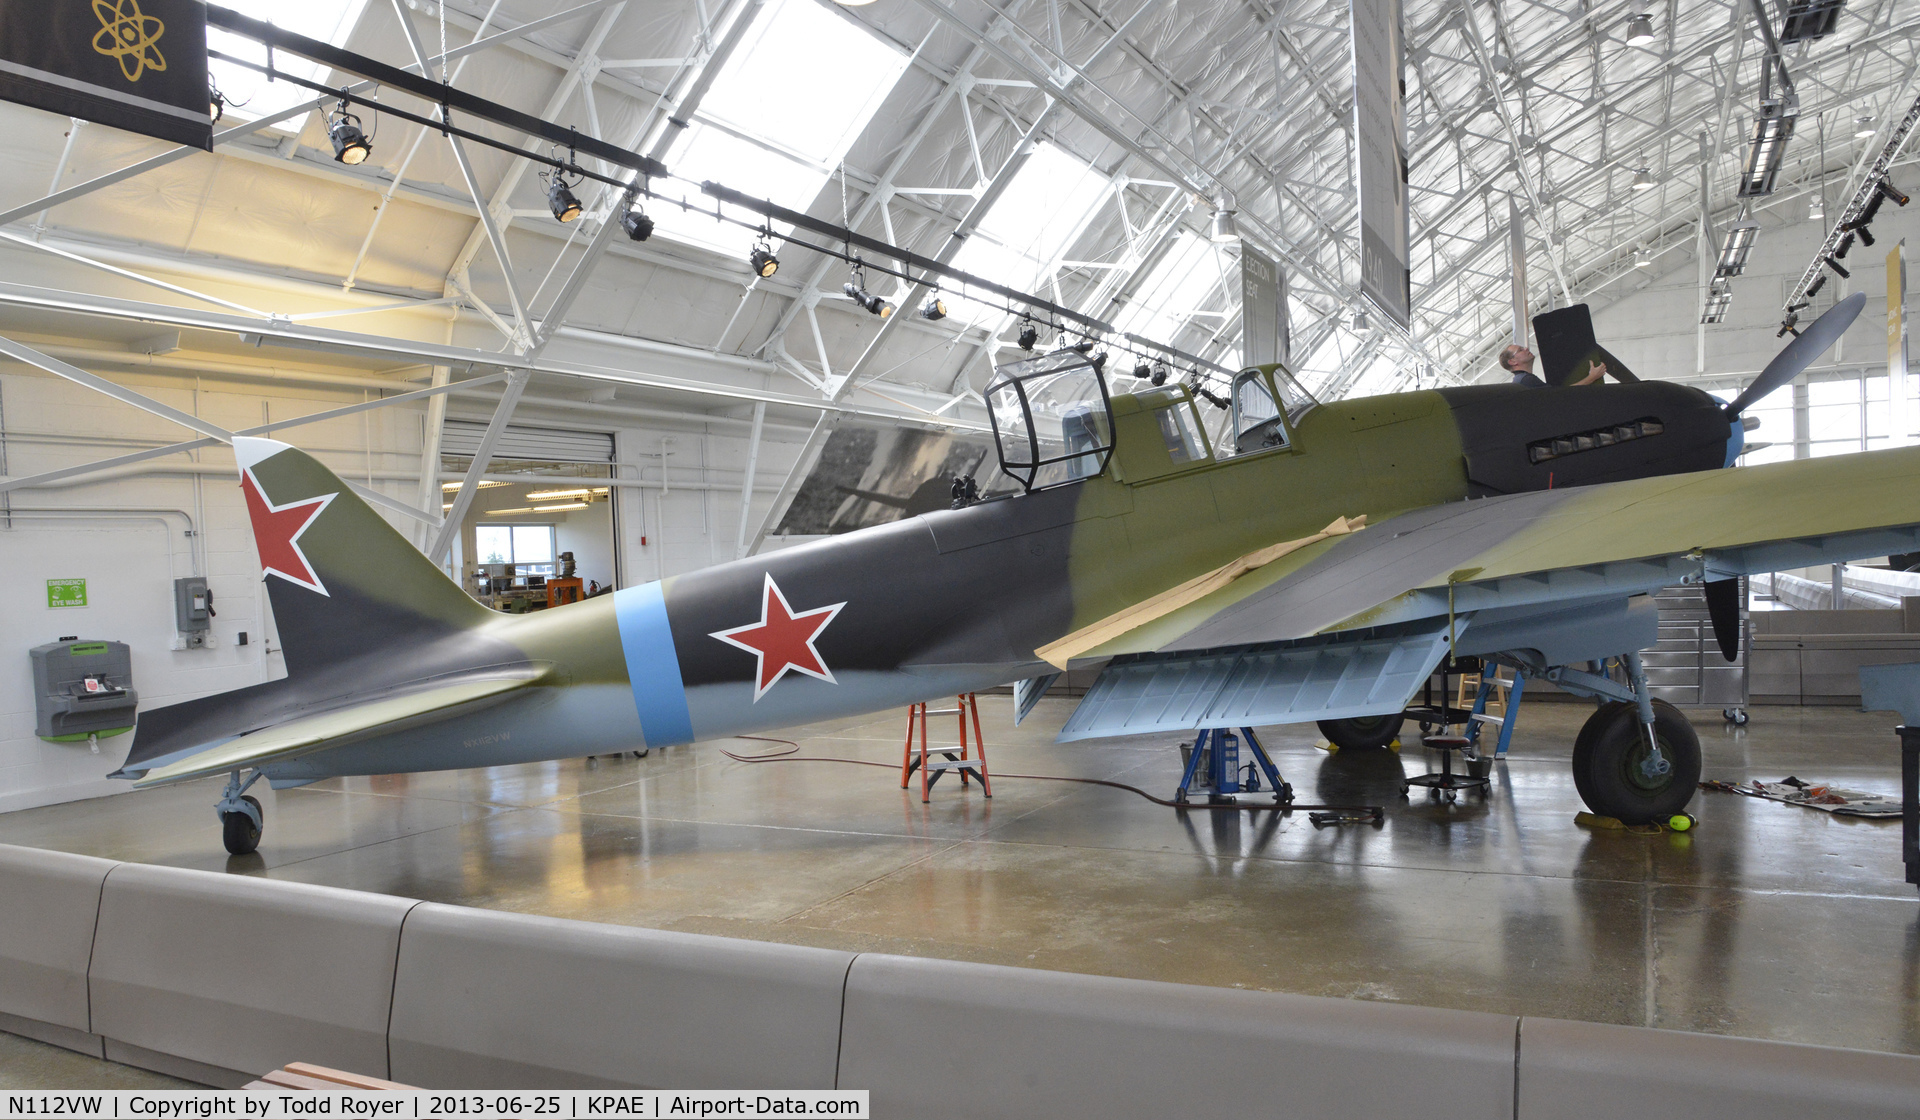 N112VW, Ilyushin Il-2M3 Shturmovik C/N 305401, Part of the Flying Heritage Collection